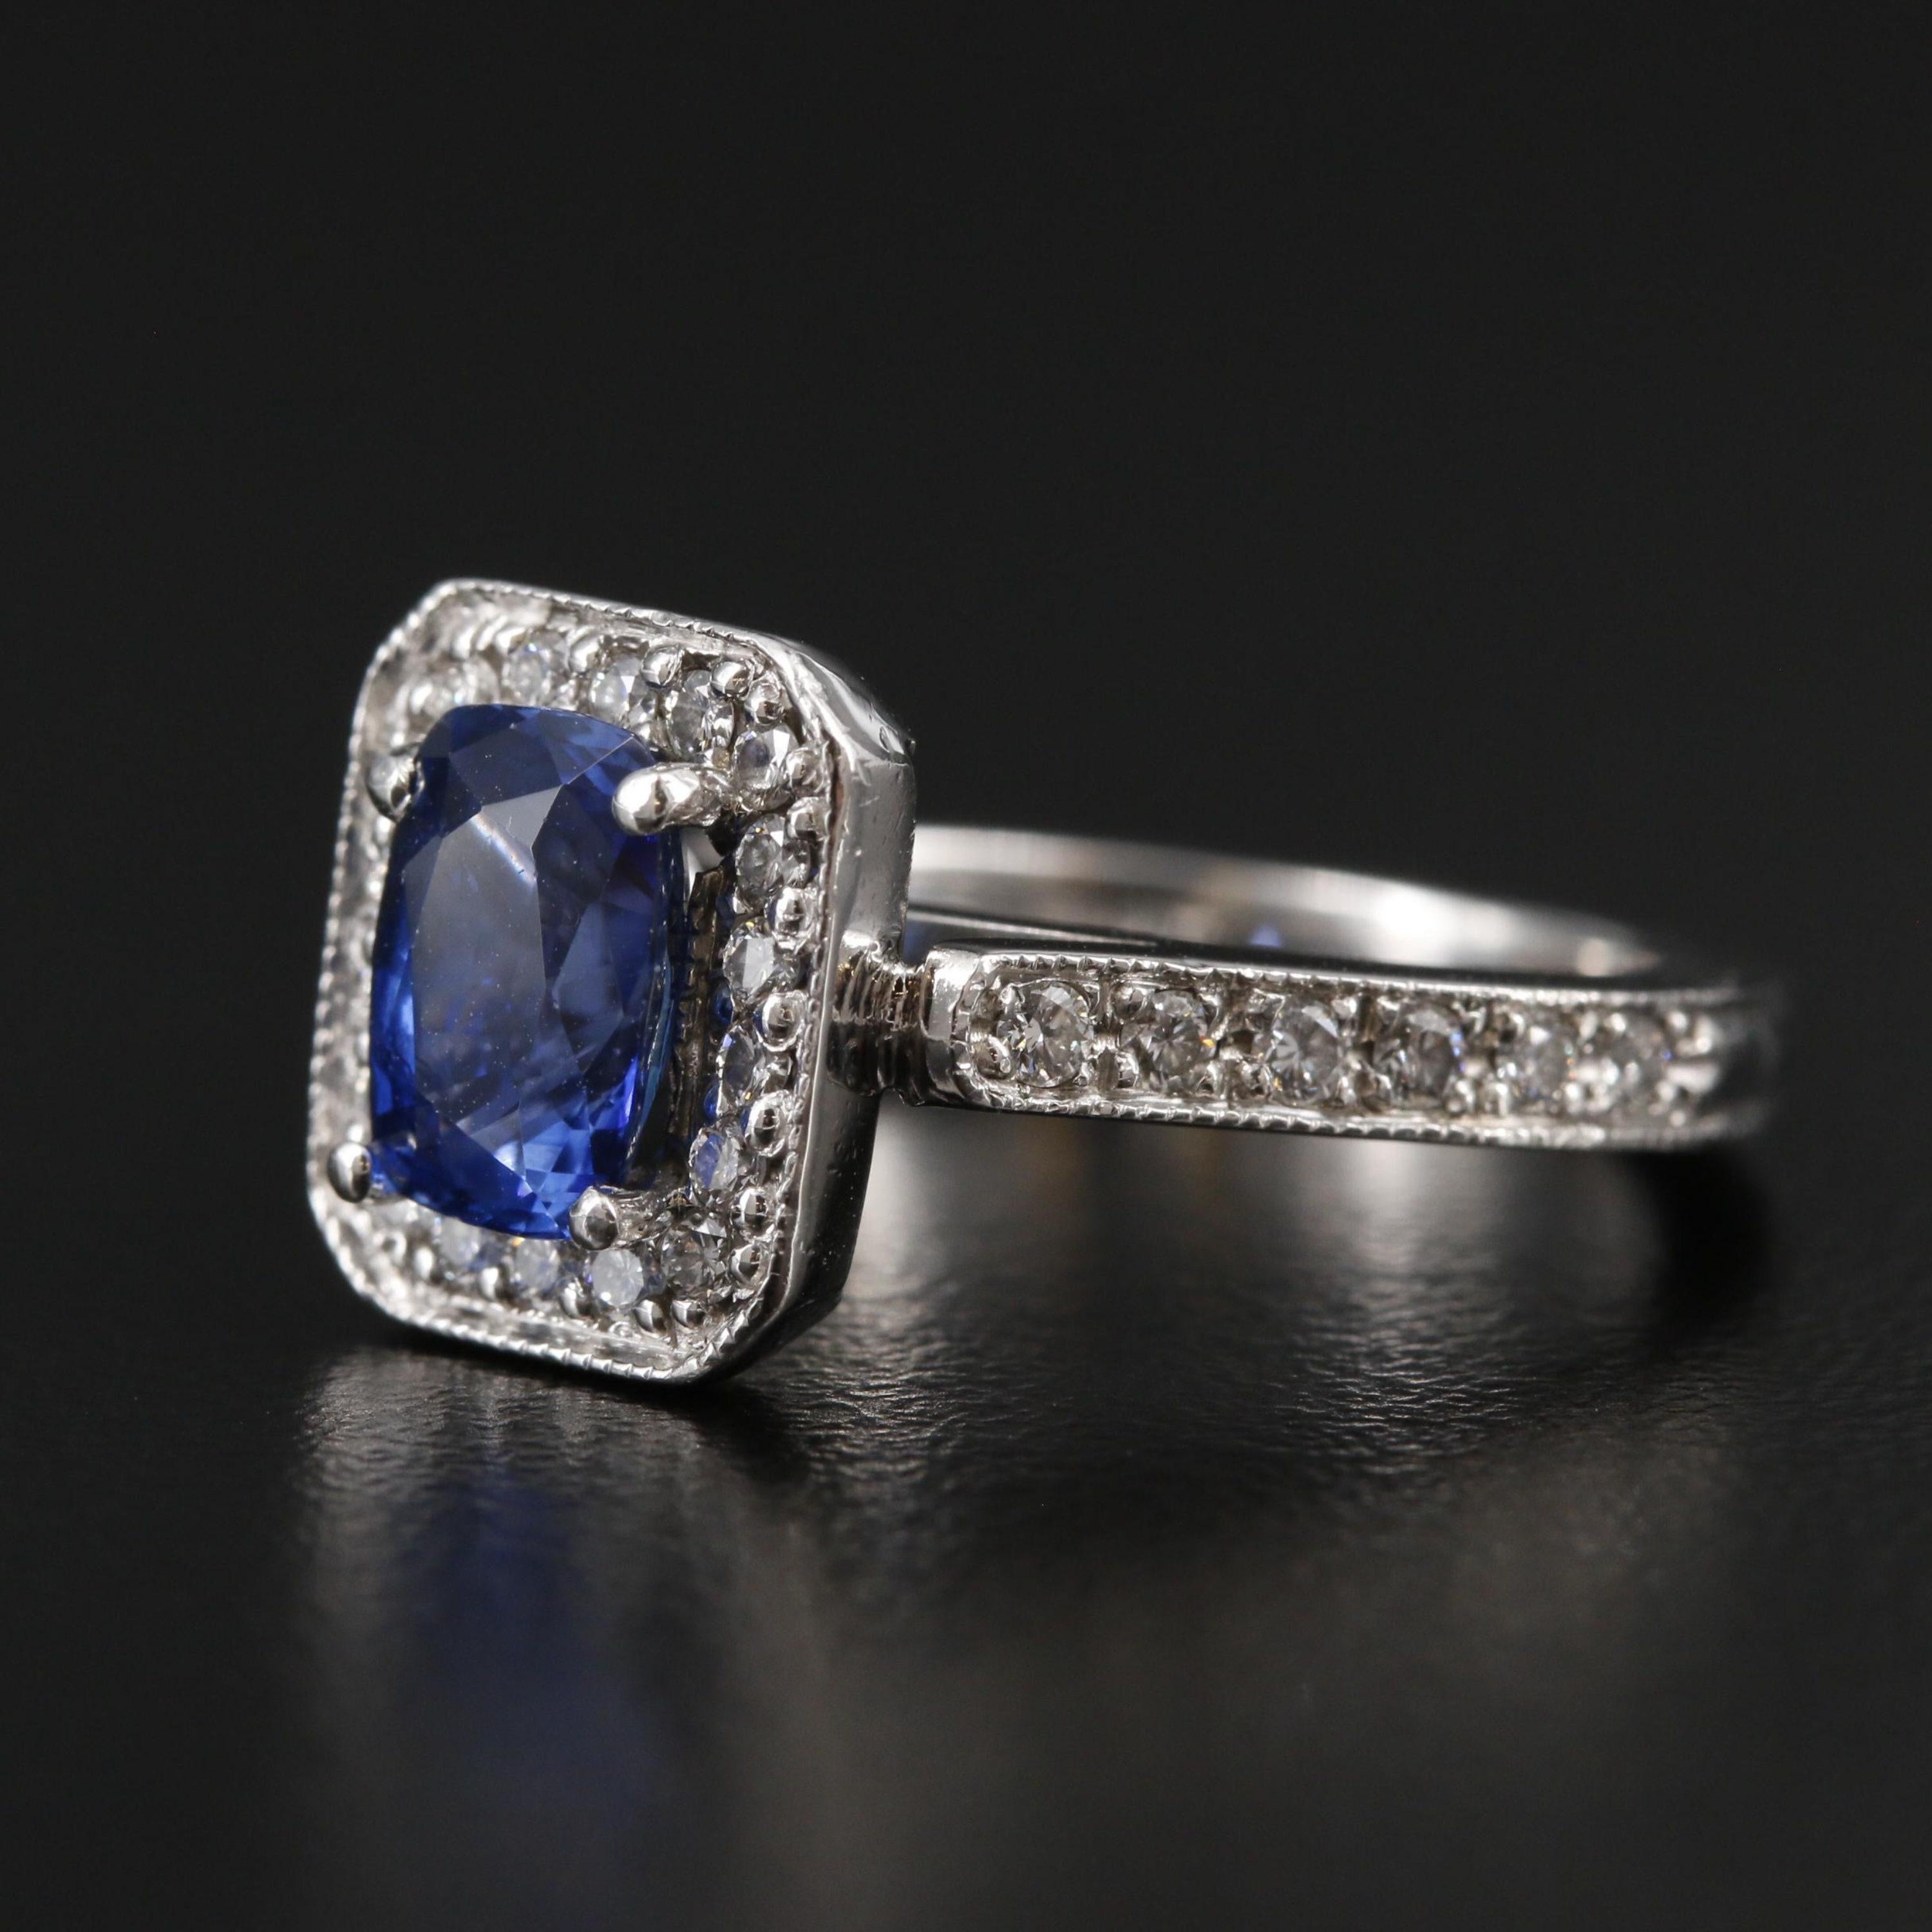 For Sale:  Art Deco Cushion Cut Sapphire Engagement Ring Halo Vintage Diamond Wedding Ring  2